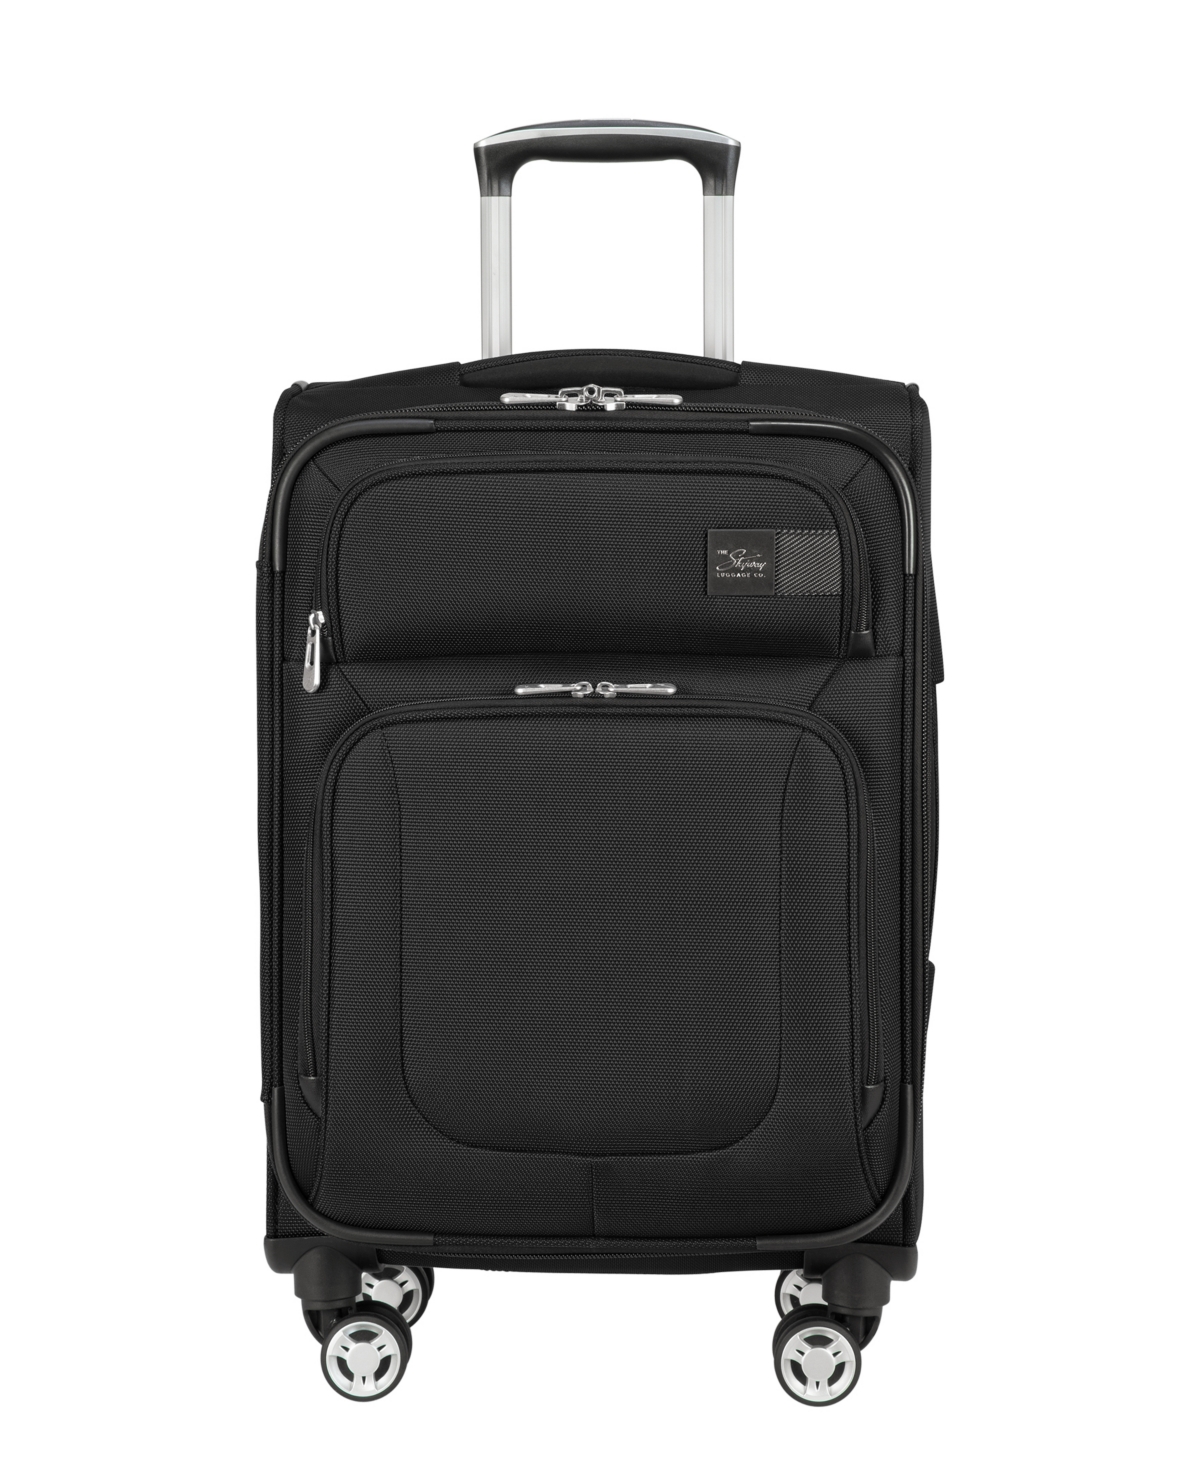 Sigma 6 20" Carry-On Luggage - Black